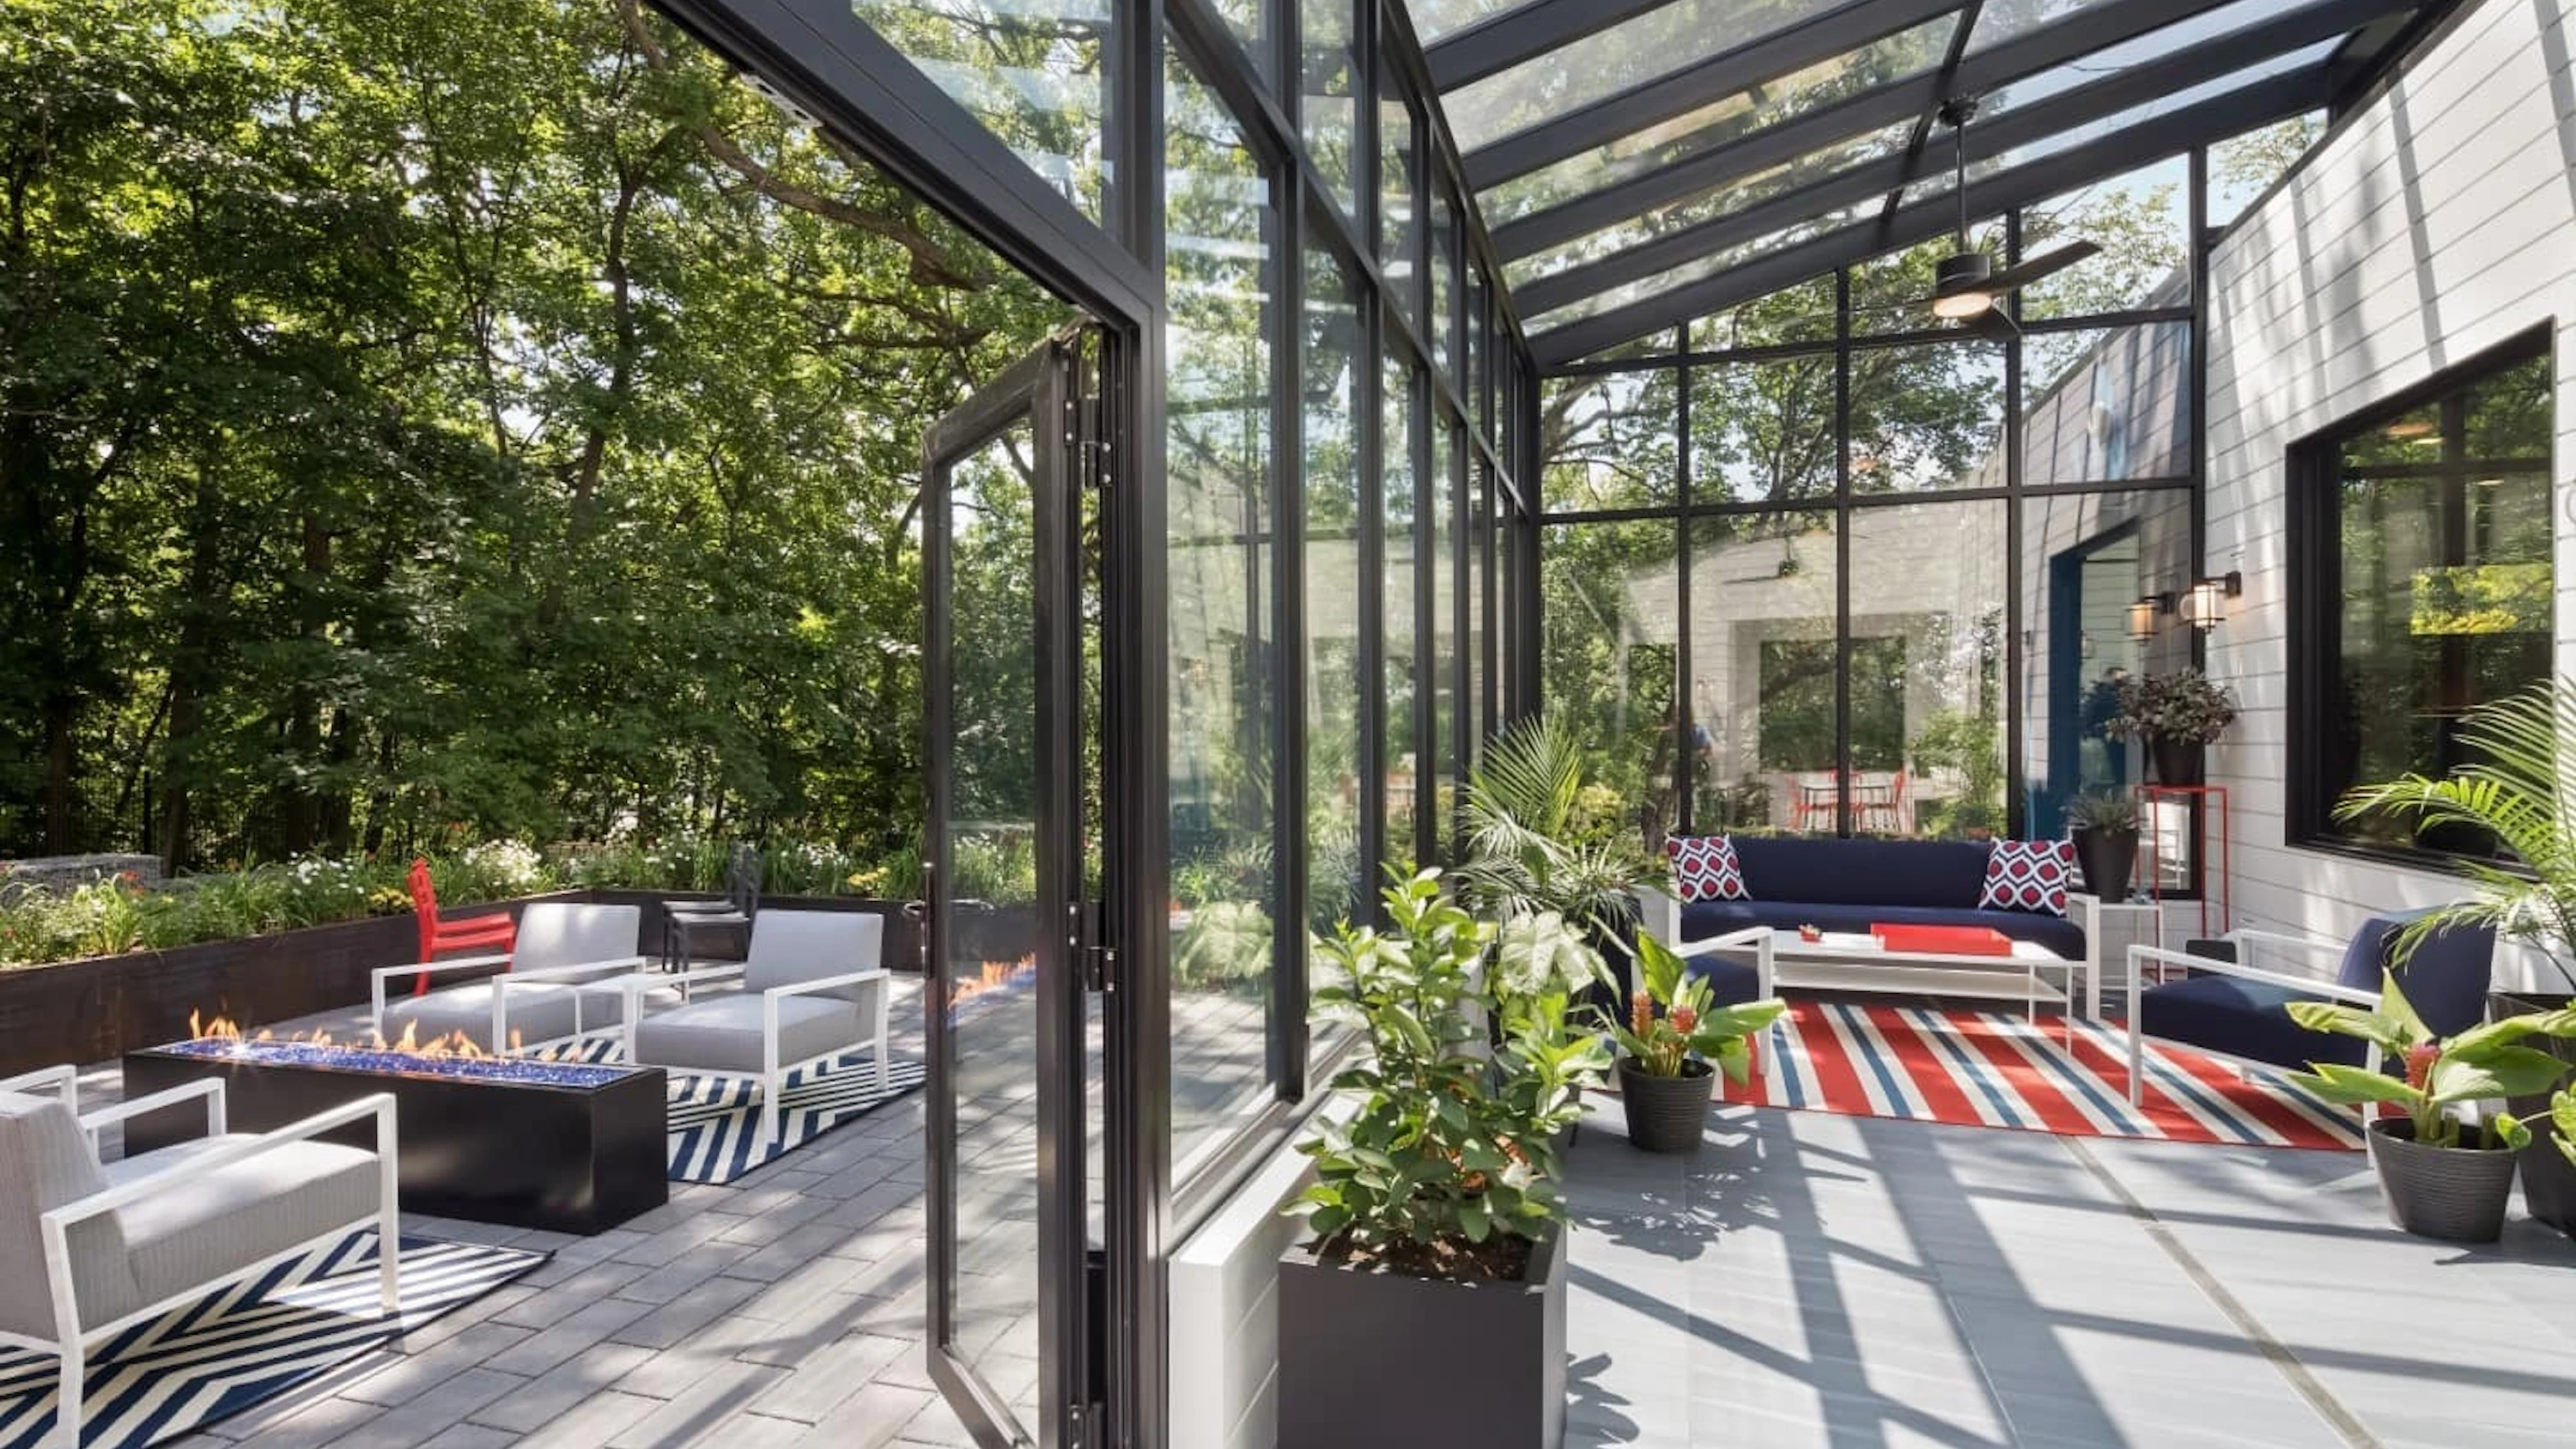 Huge glass-enclosed conservatory